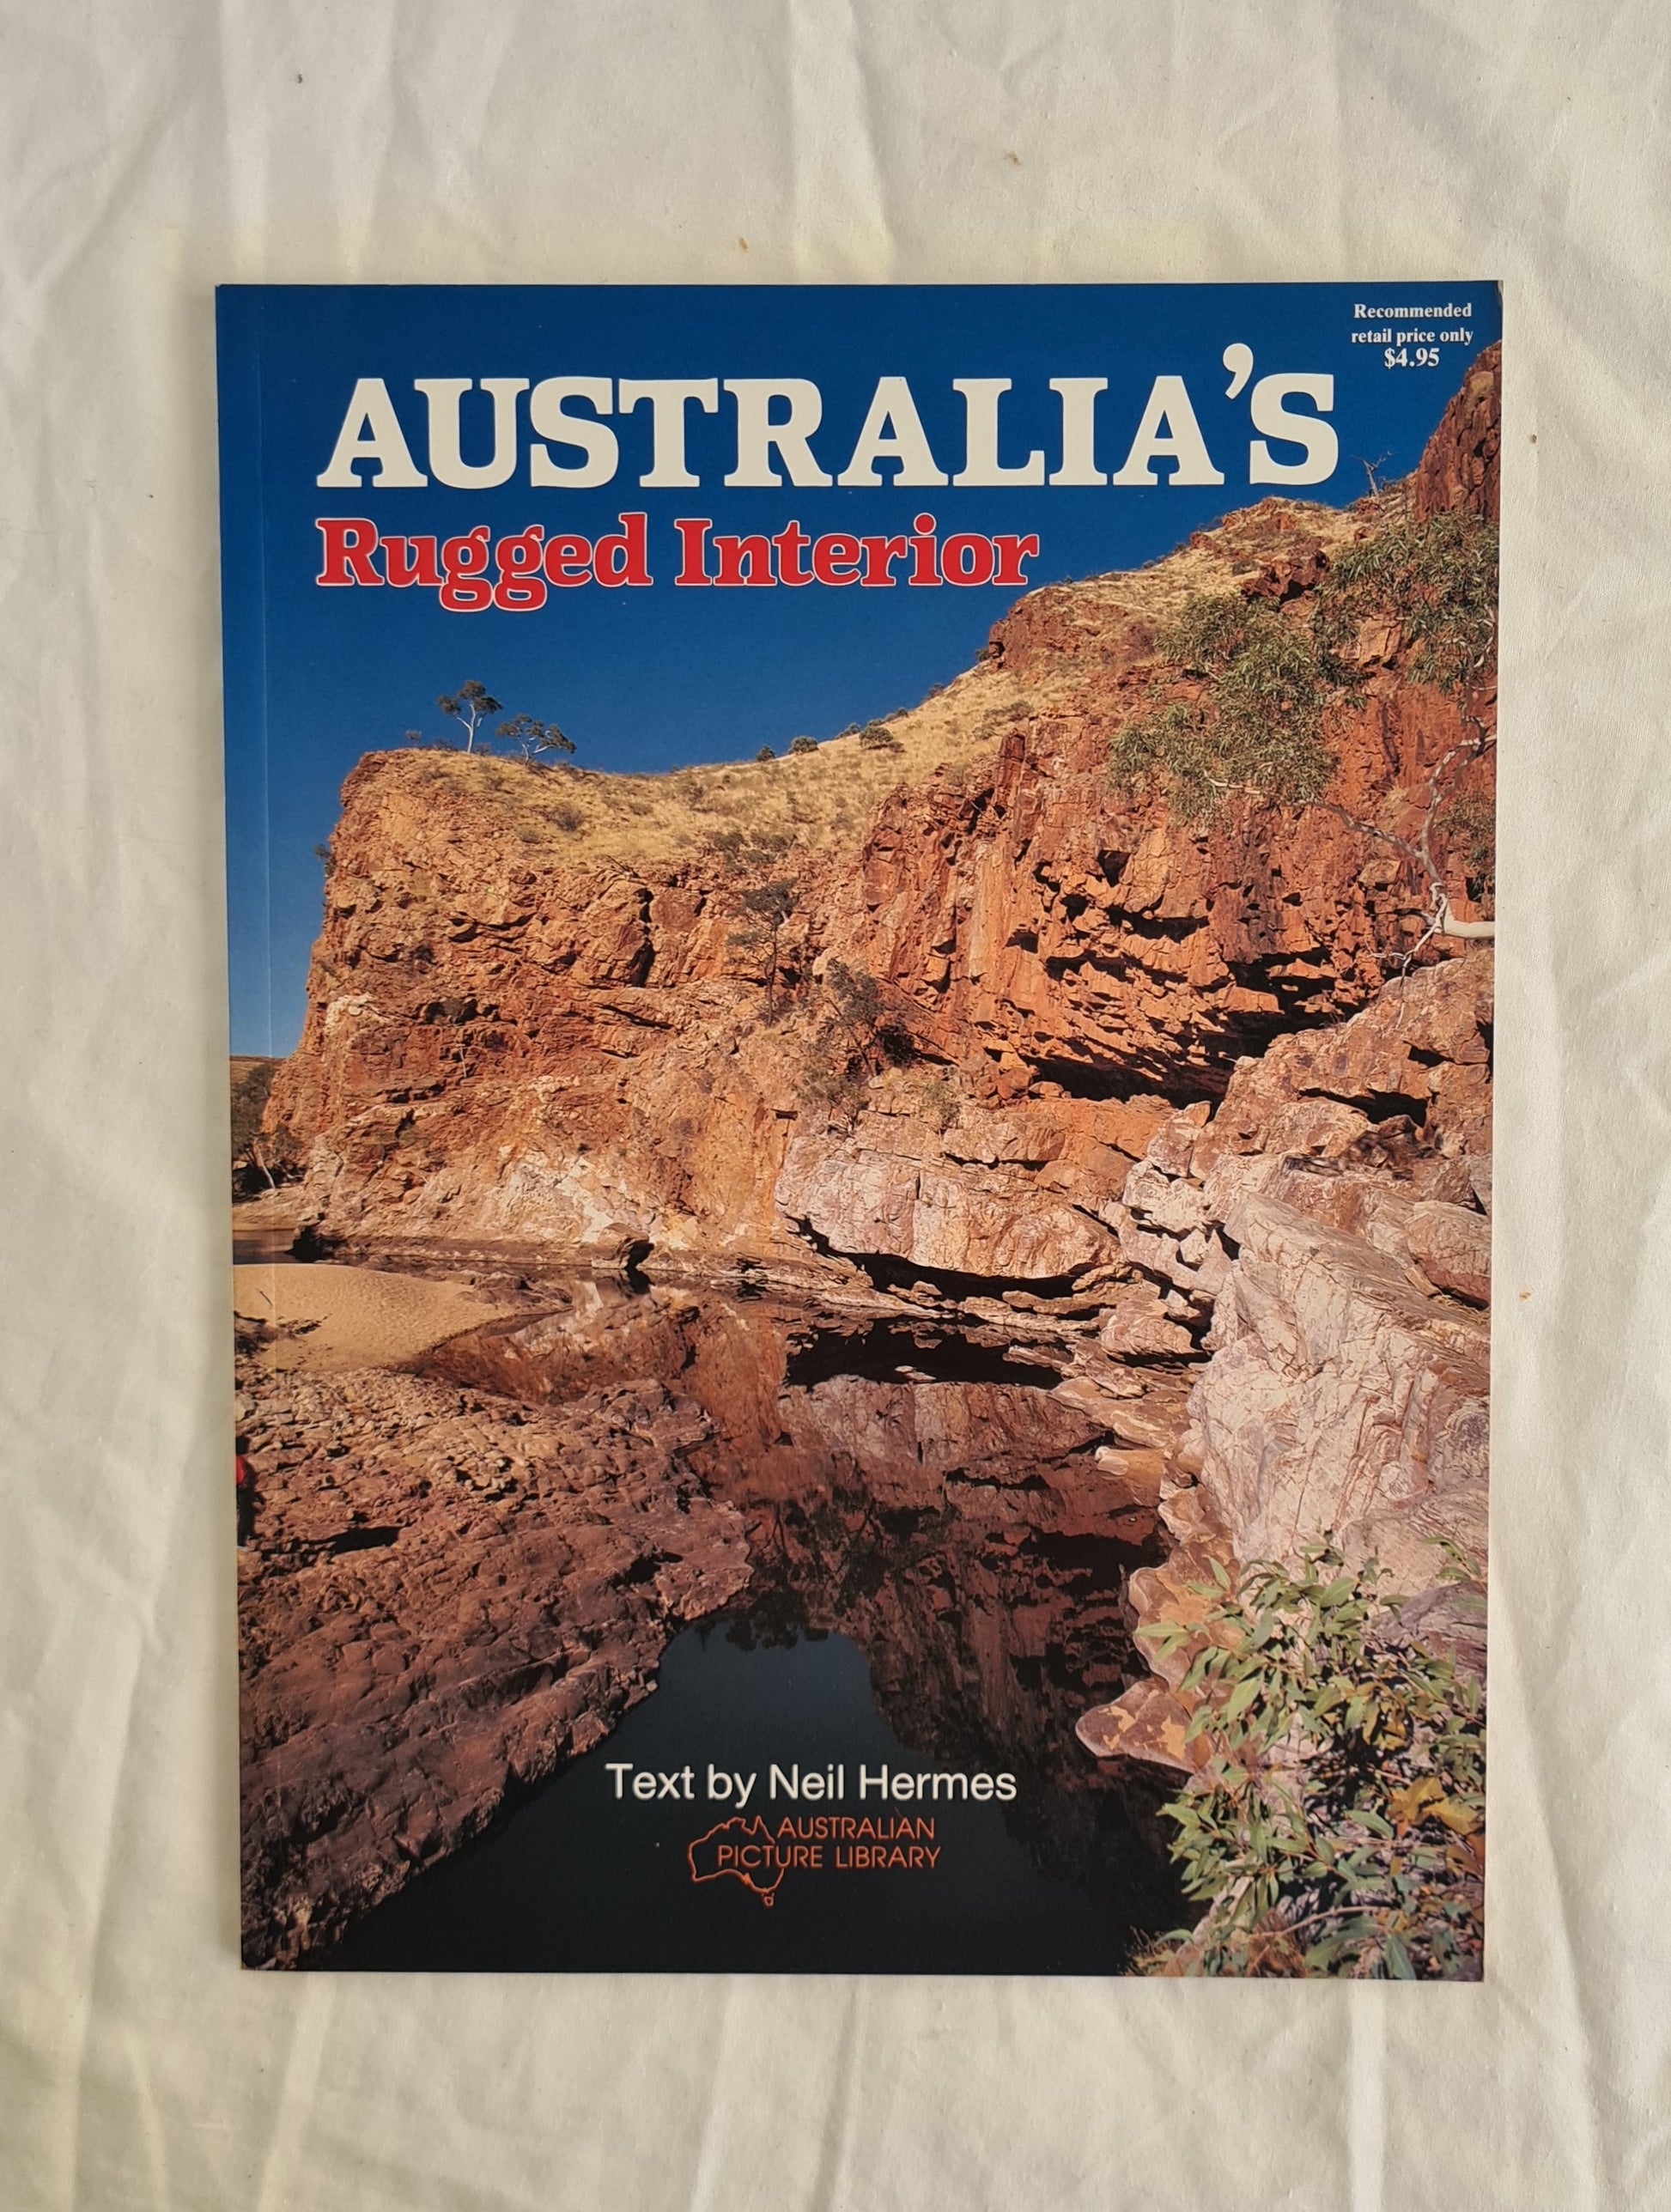 Australia’s Rugged Interior by Neil Hermes